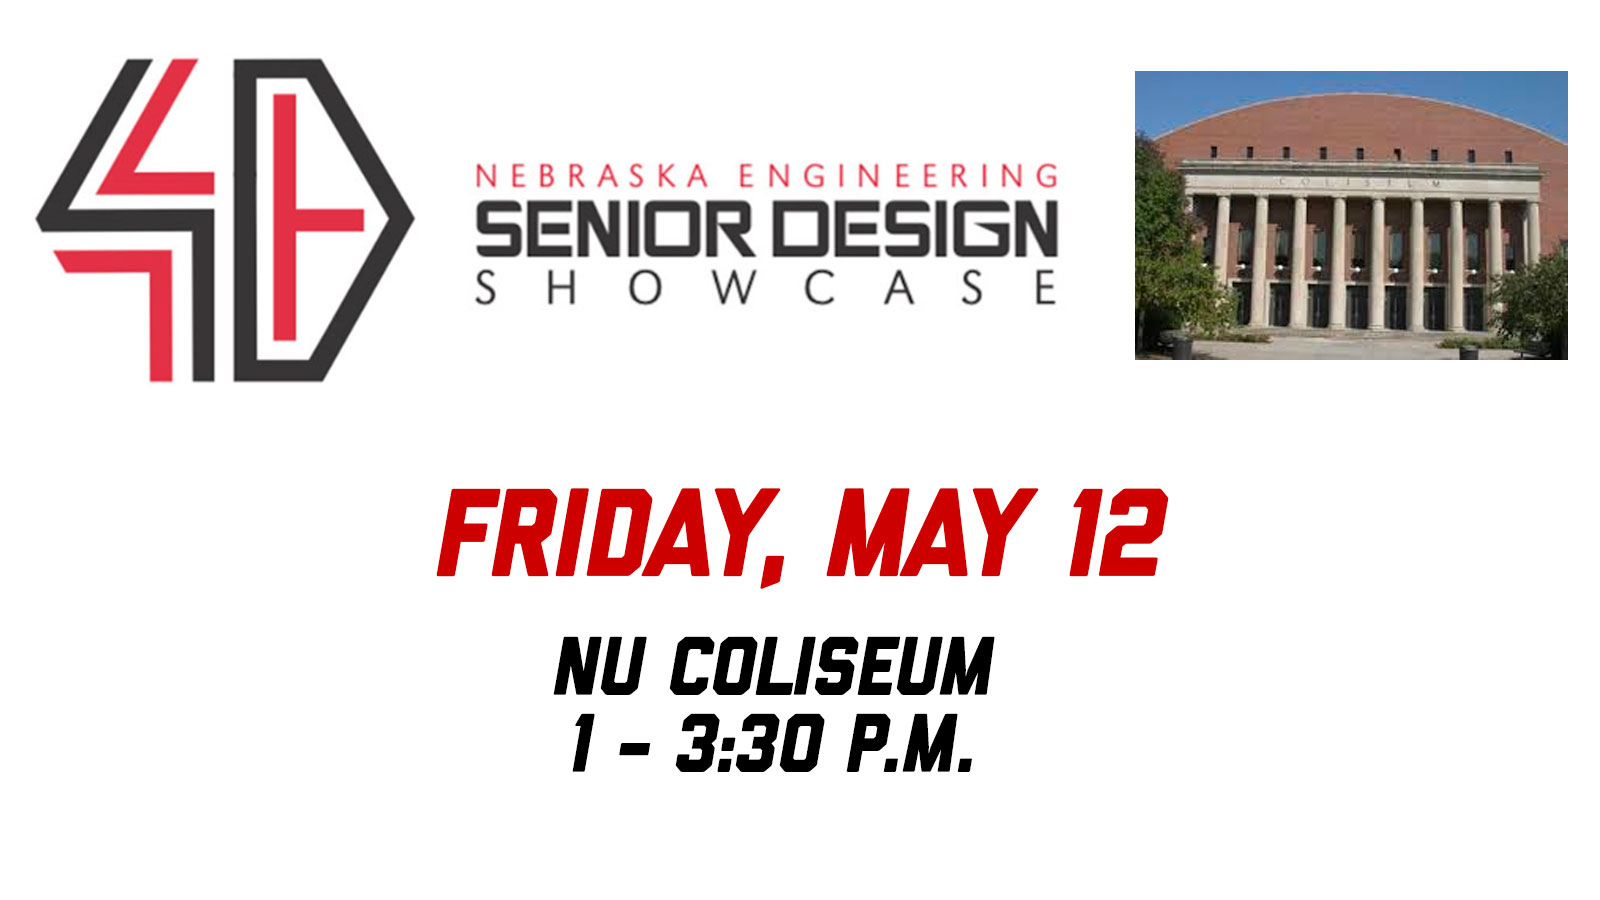 Senior Design Showcase is Friday, May 12.